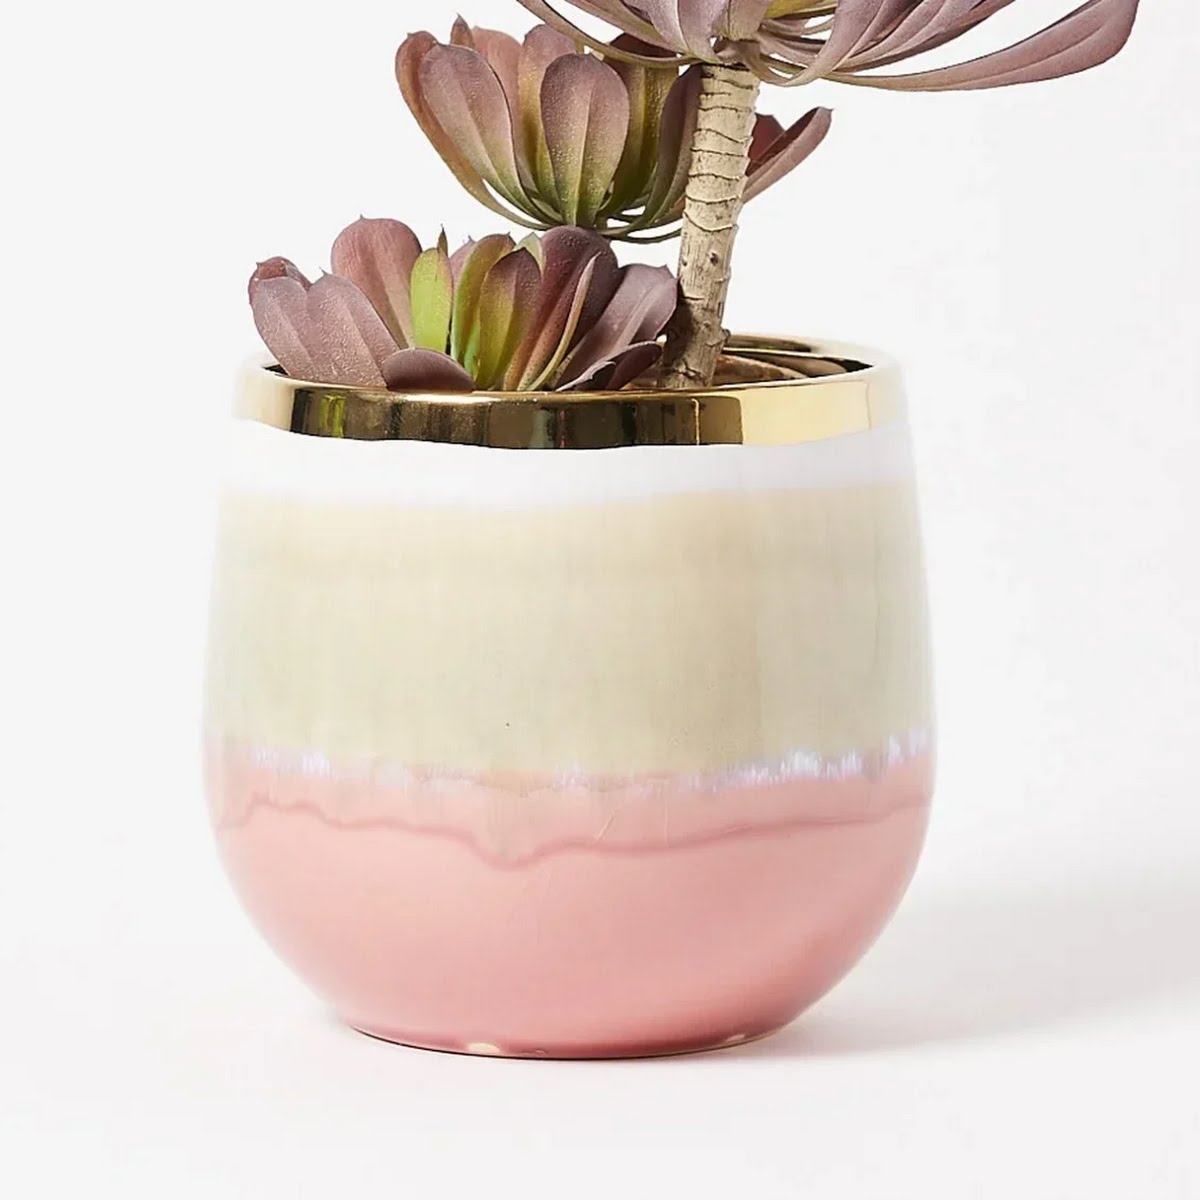 Oliver Bonas, Laine Pink Ceramic & Gold Foil Plant Pot Large, €23.50